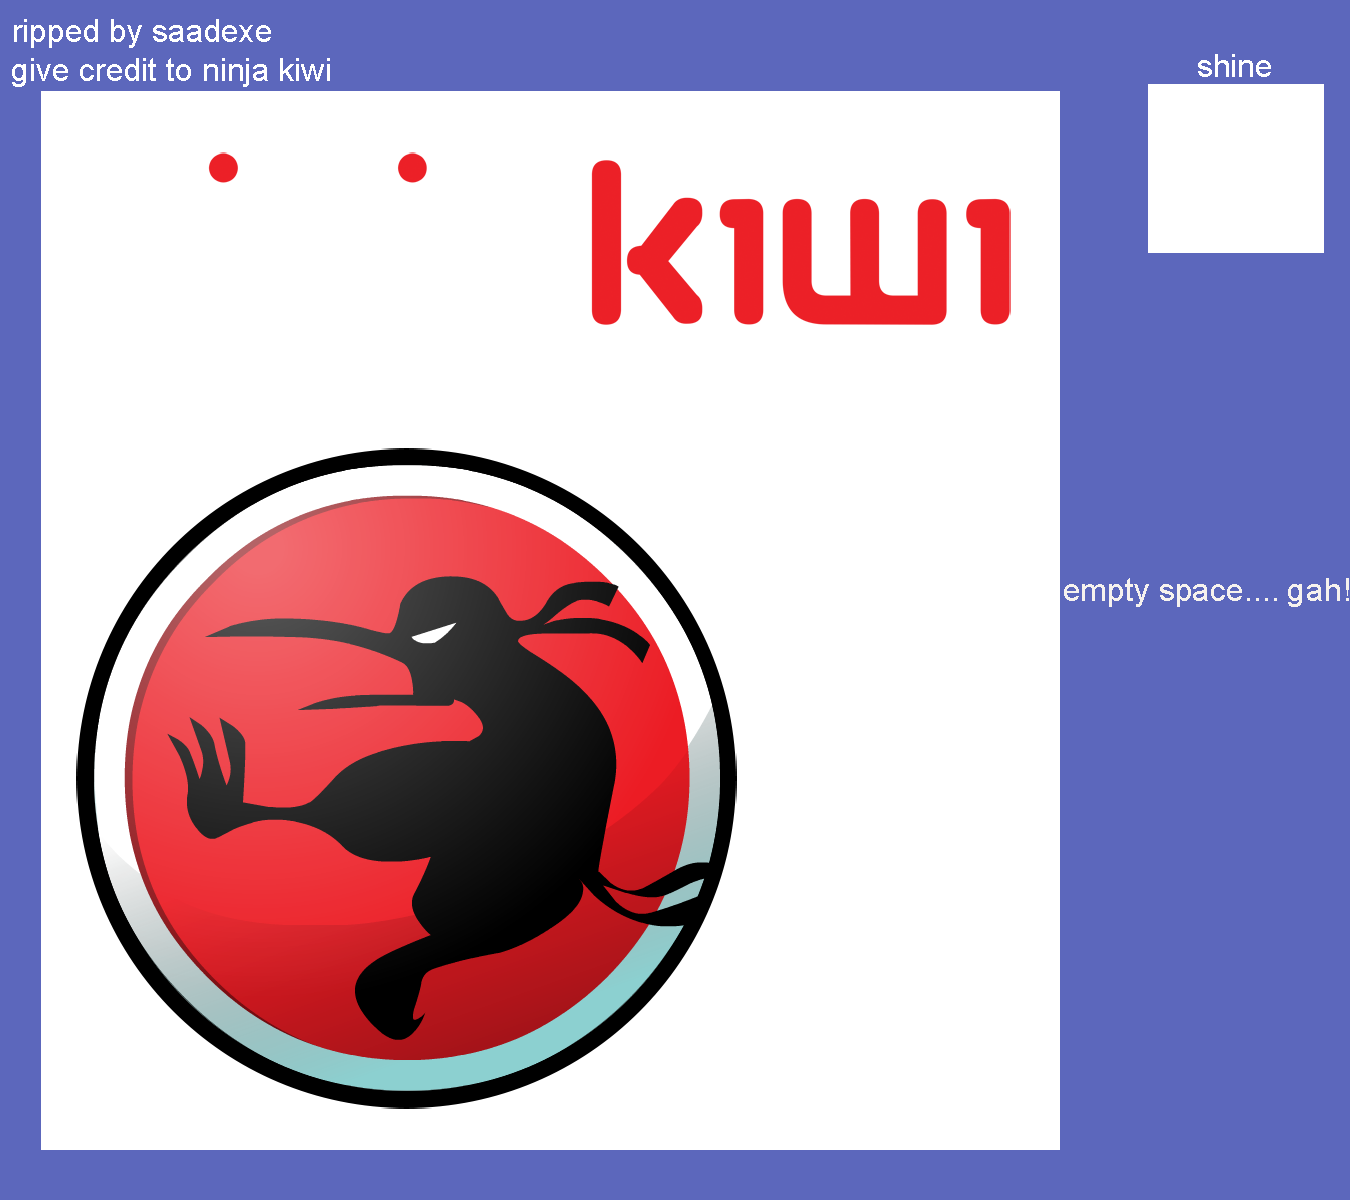 Bloons TD5 (Steam) - Ninja Kiwi Splash Screen